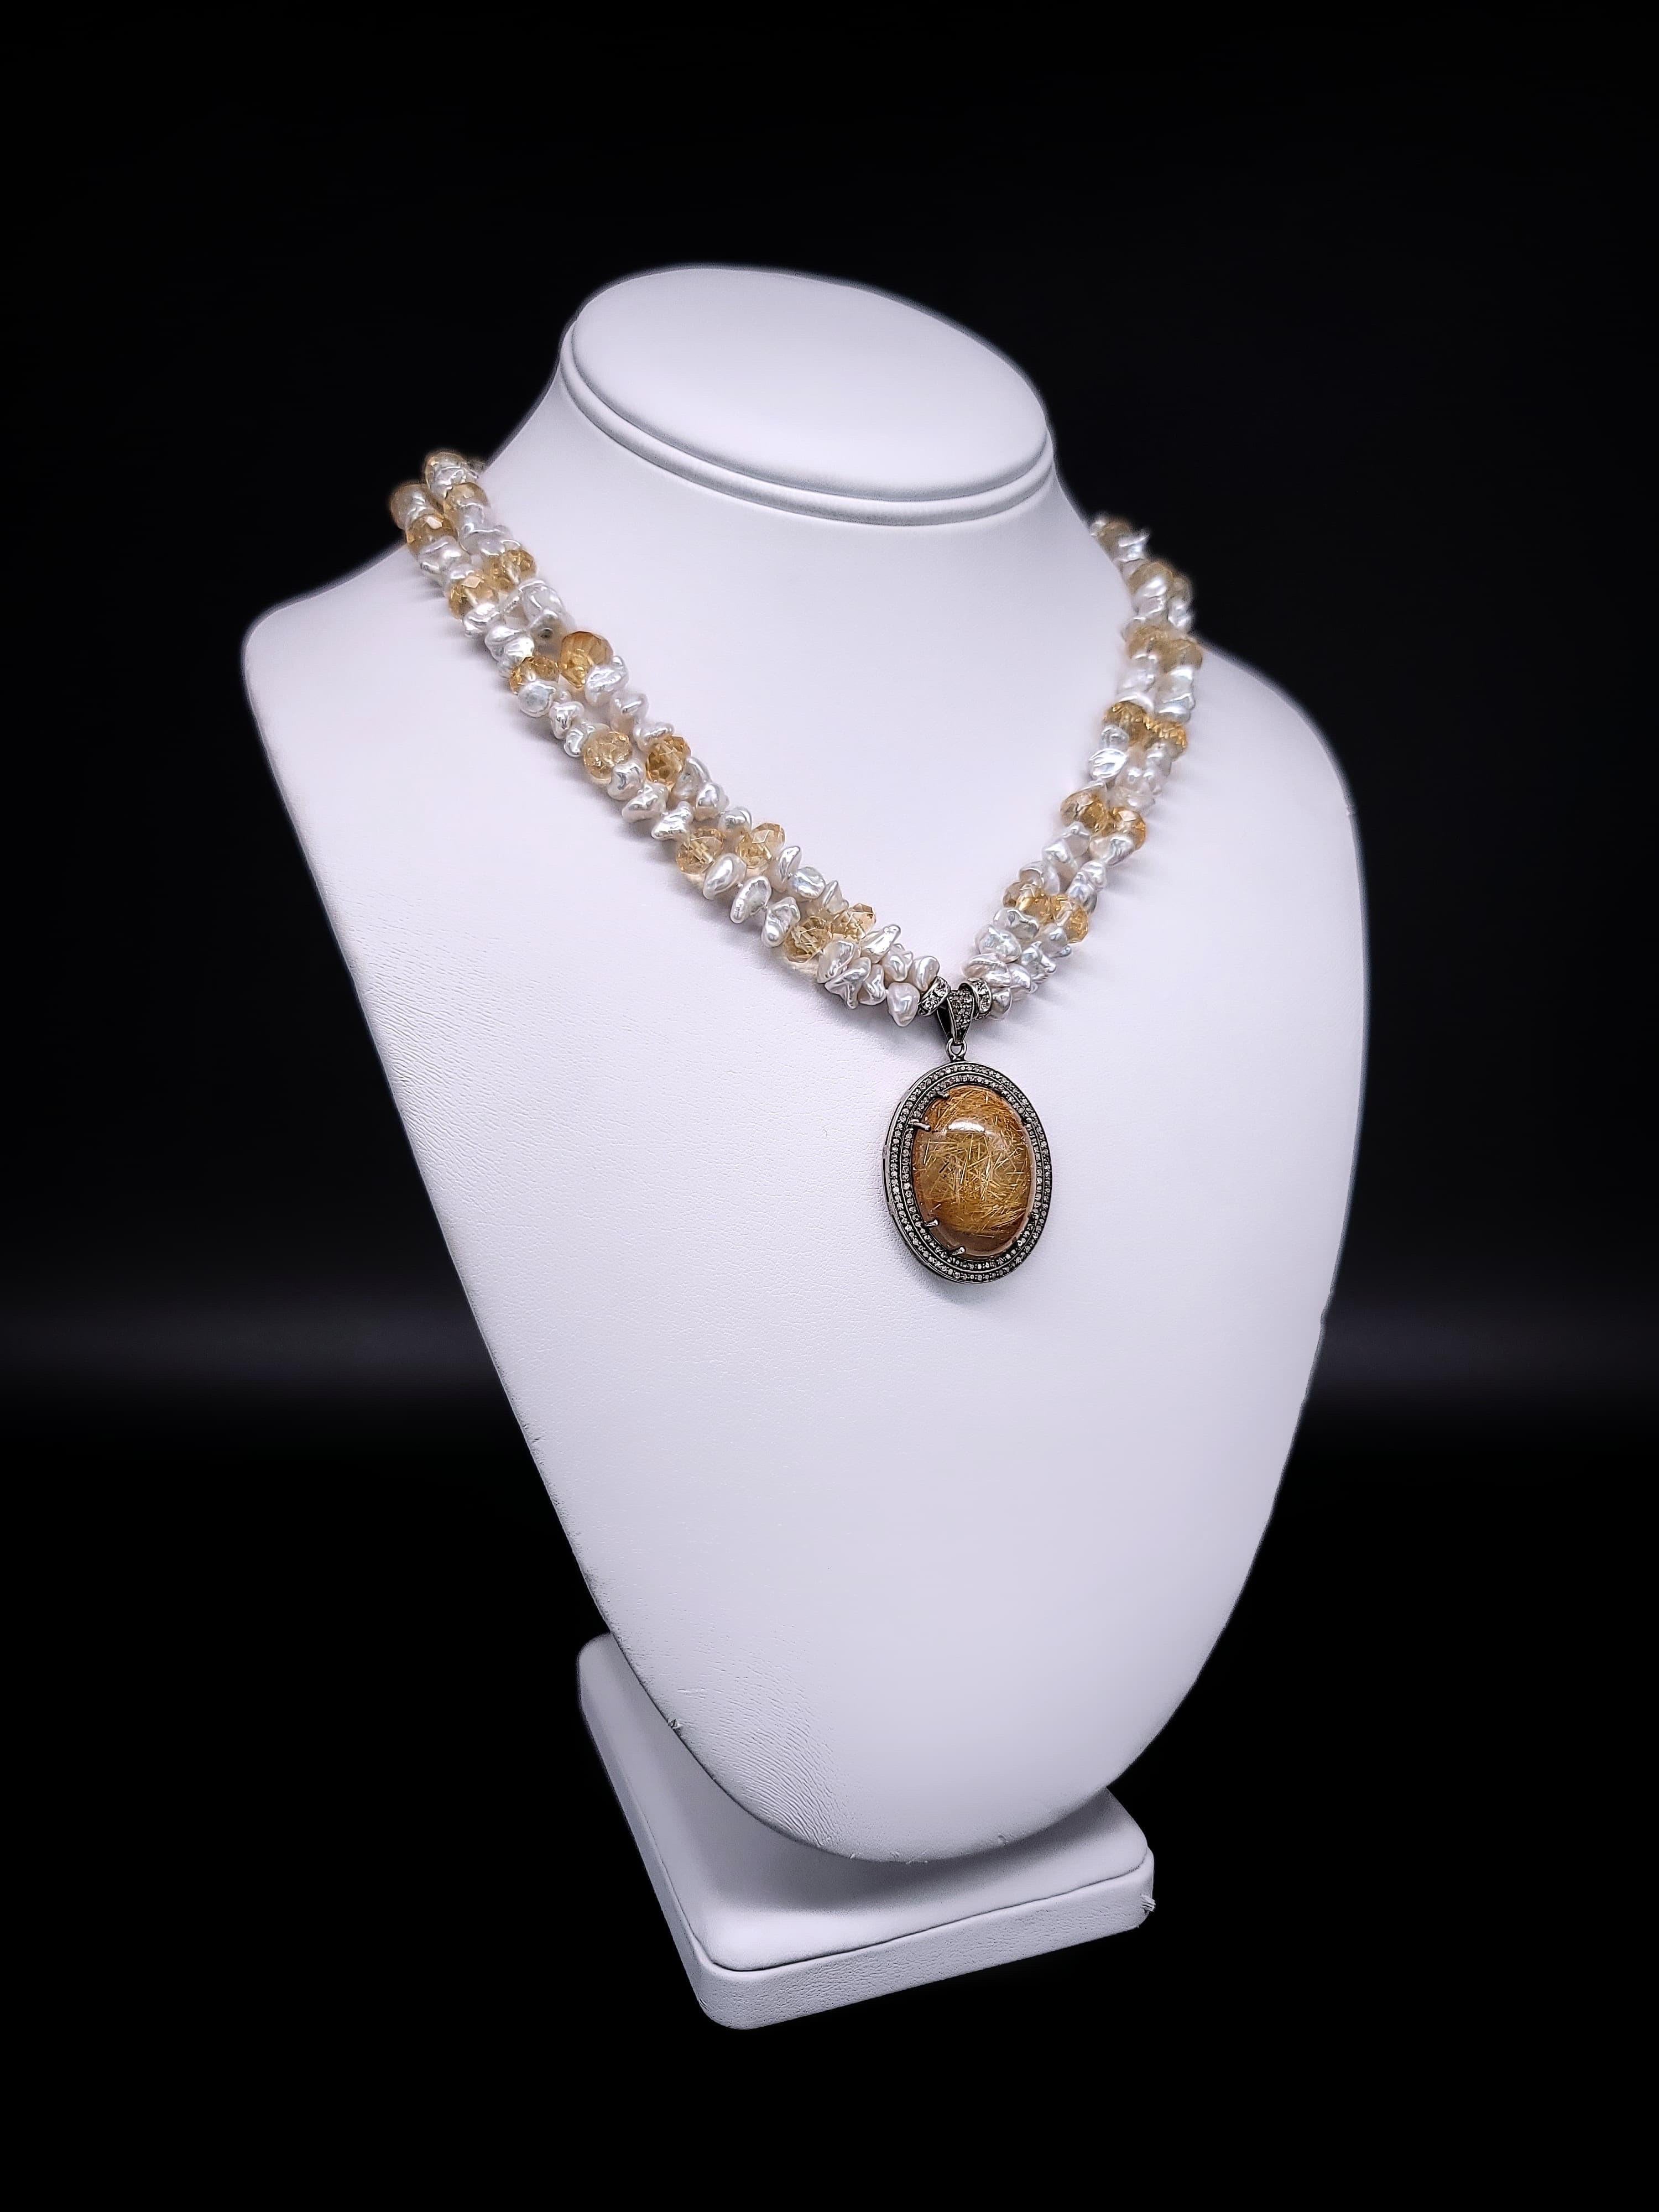 A.Jeschel Masterpiece of Golden Rutilated Quartz Pendant encircled with Diamonds For Sale 9